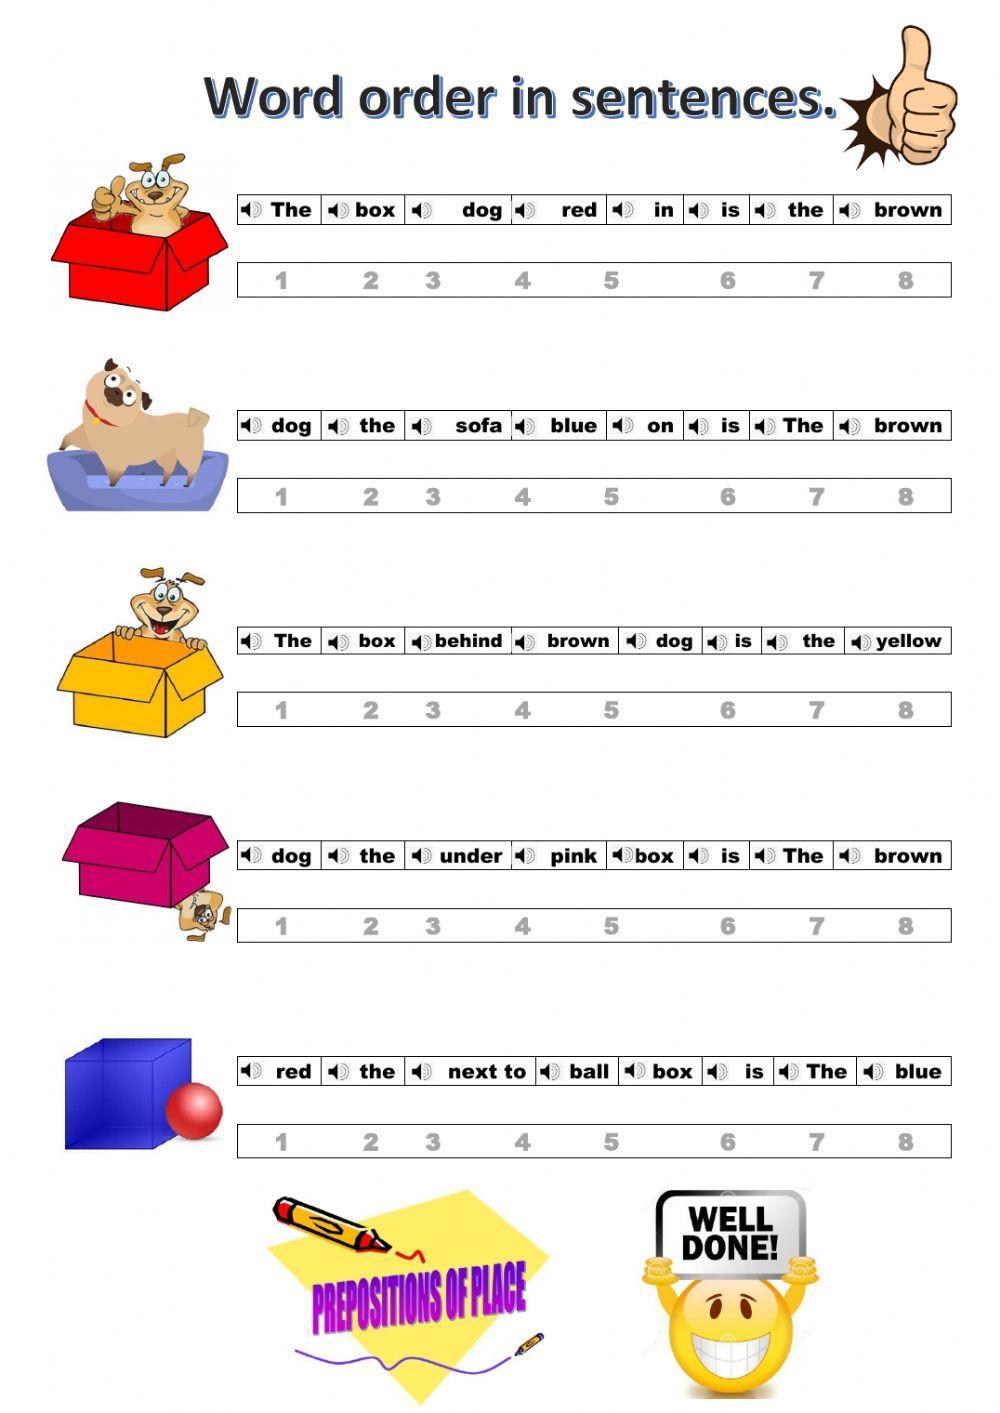 Word order prepositions